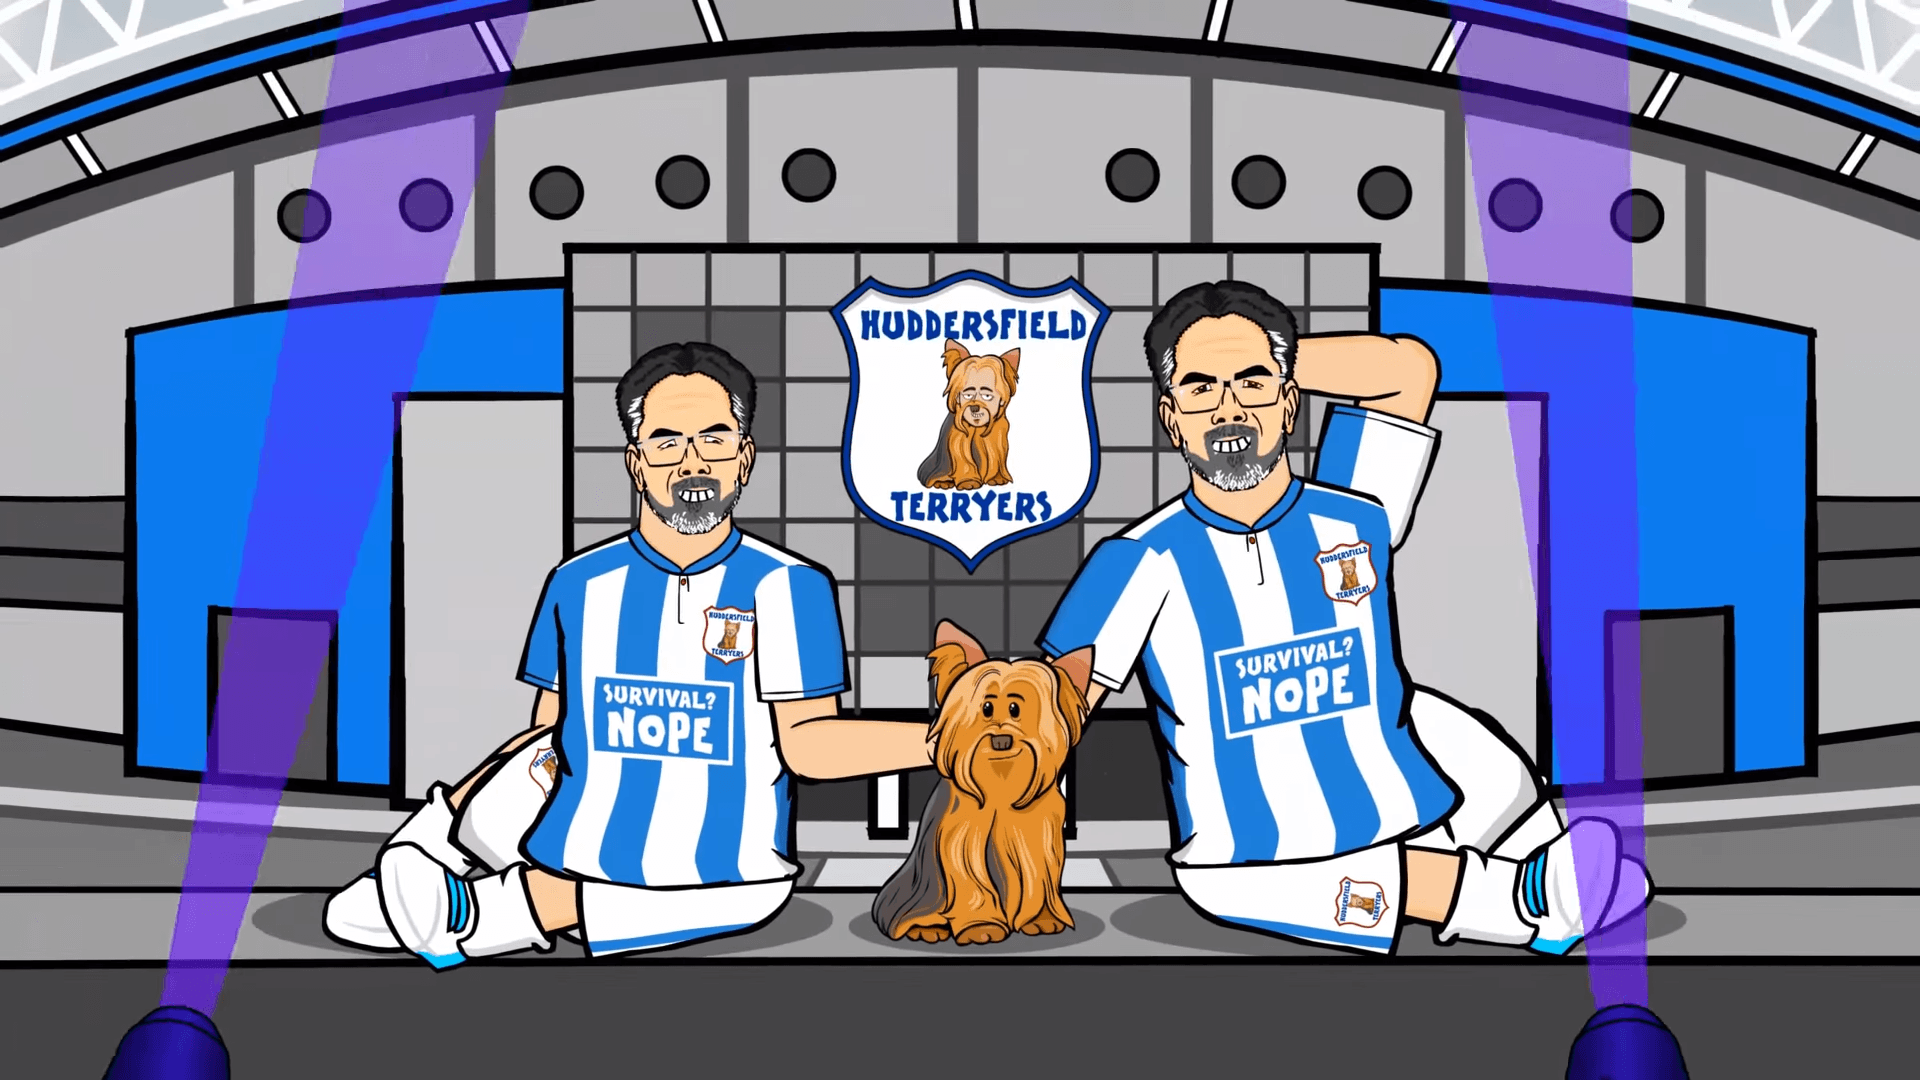 Huddersfield Terryersoons